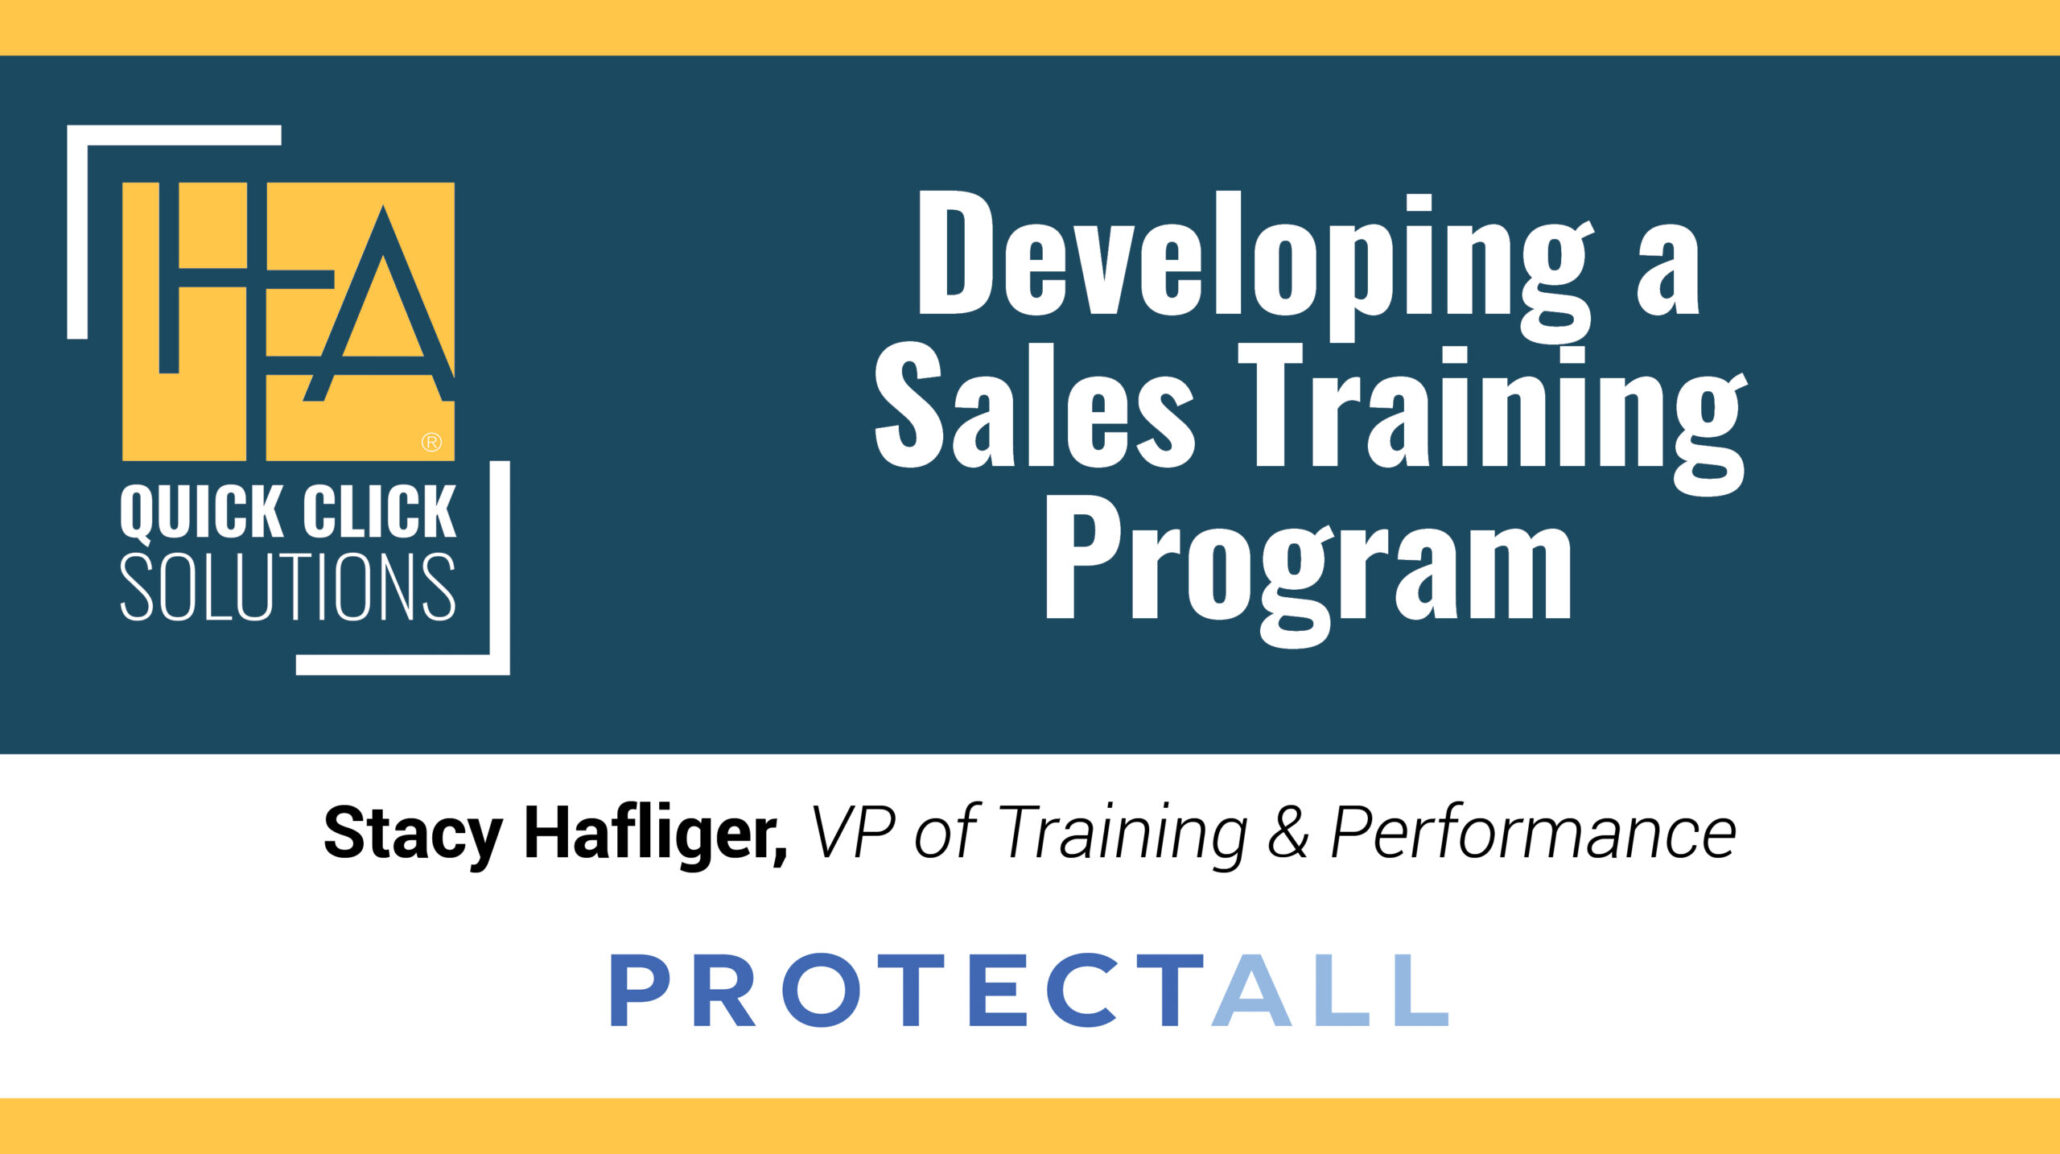 HFA_QCS-Developing a Sales Training Program